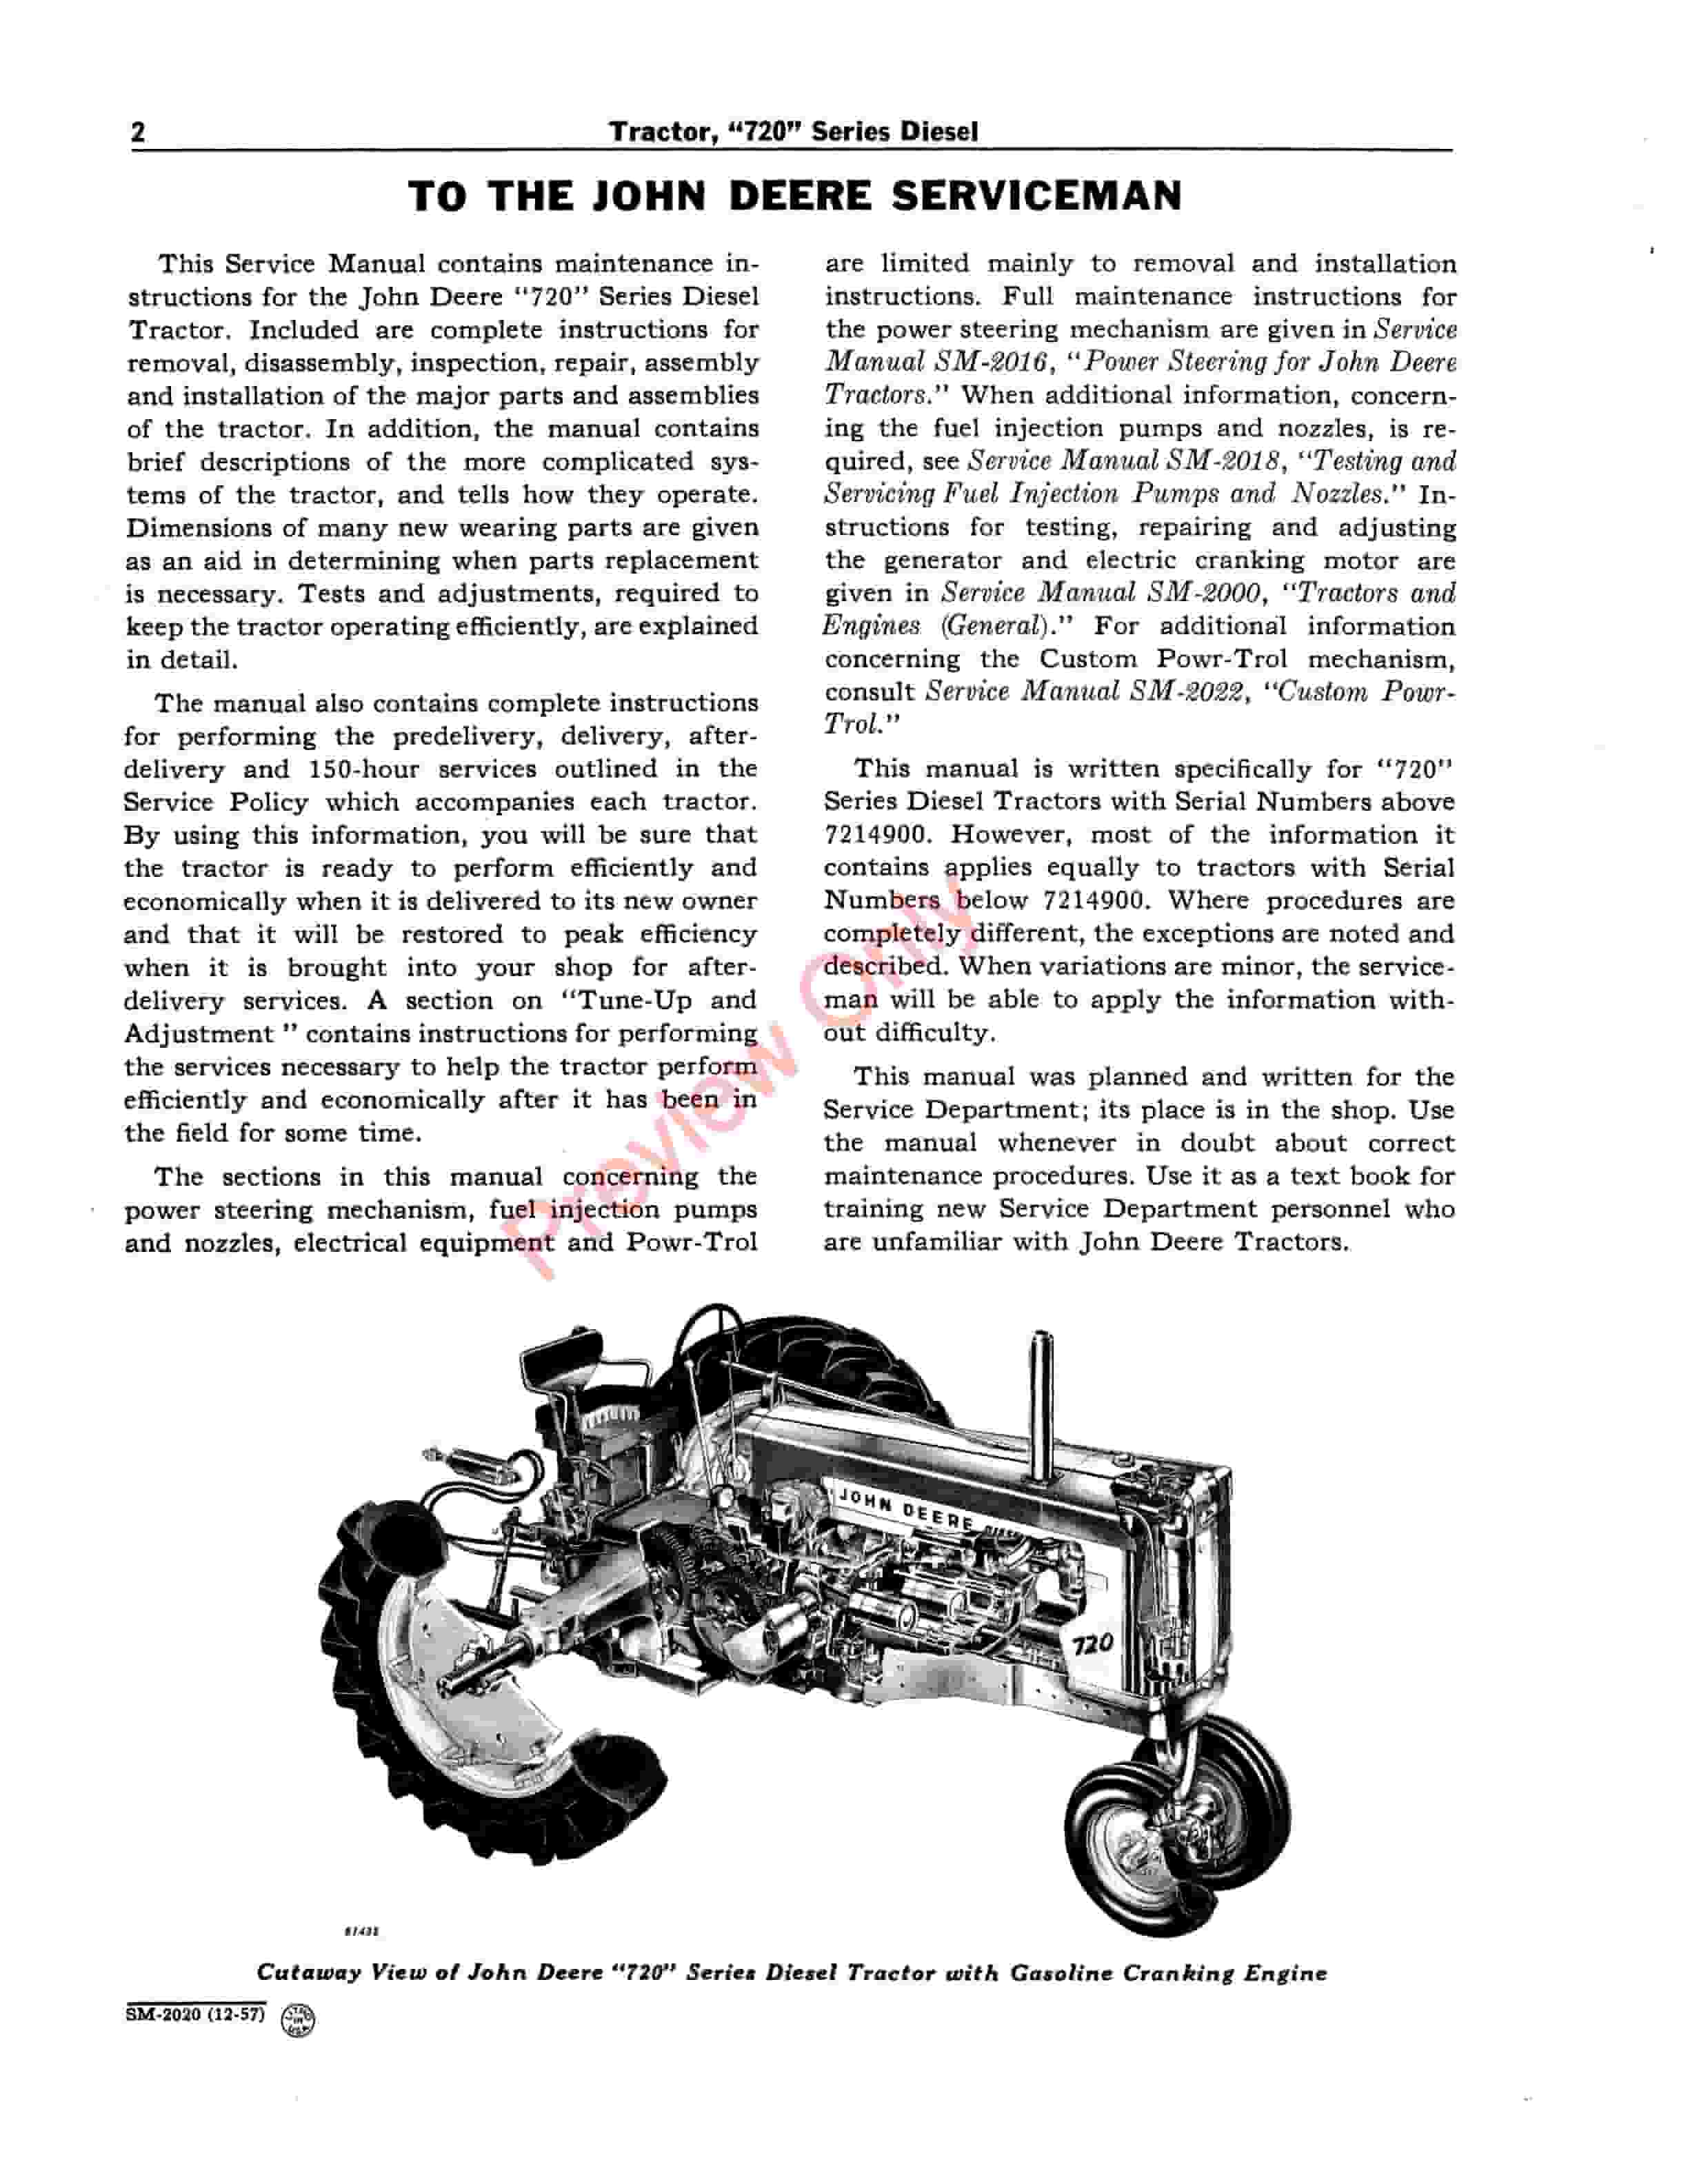 John Deere 720 Series Diesel Tractors Service Manual SM2020 01DEC57 4